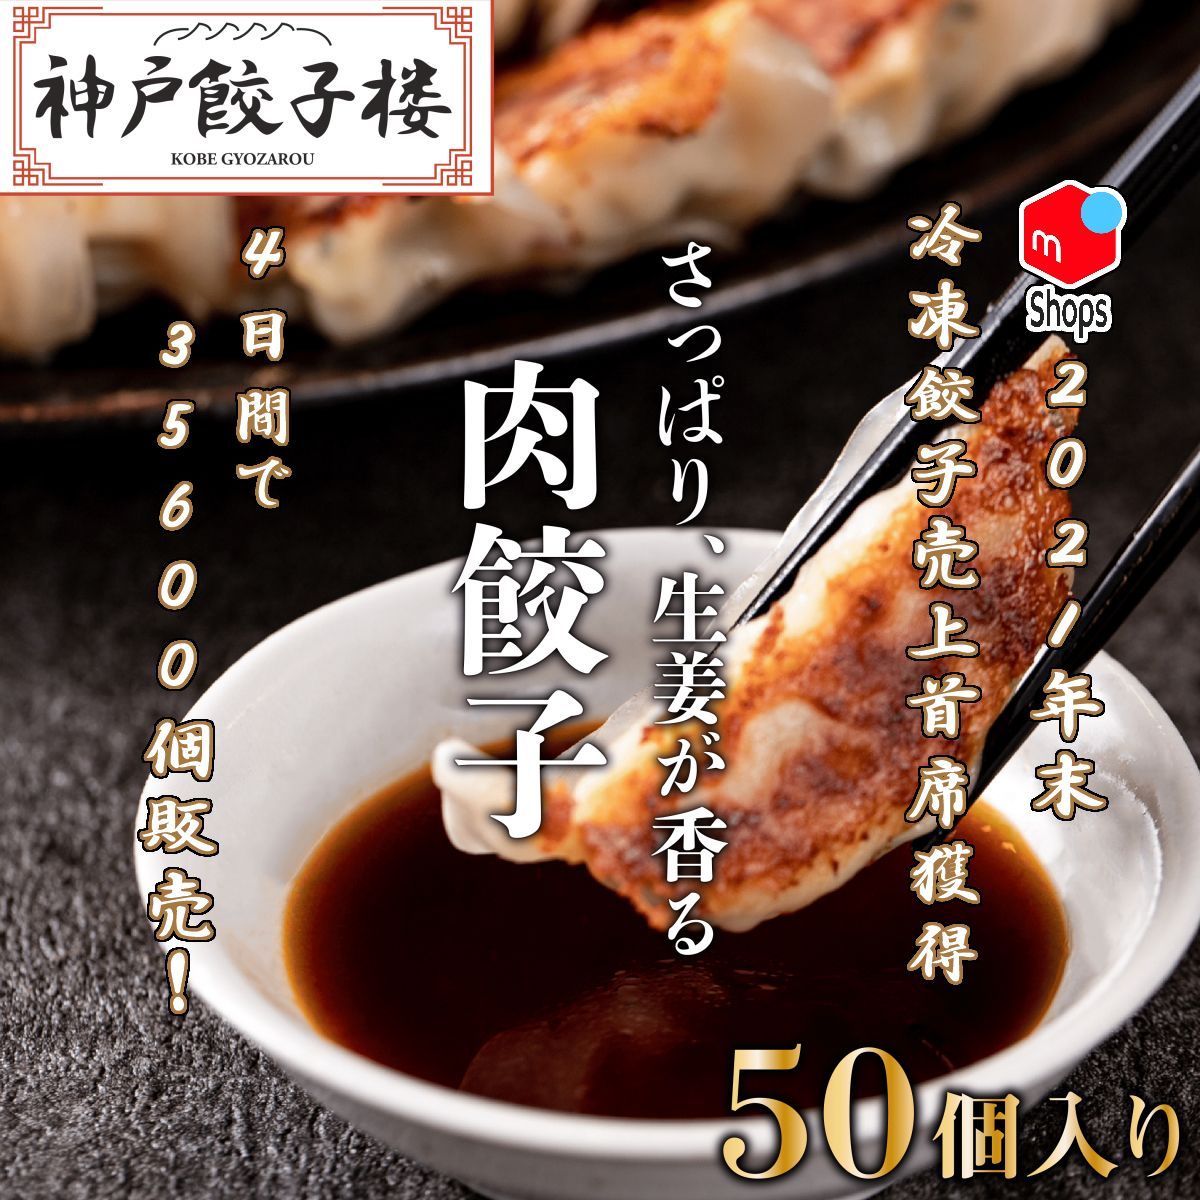 神戸餃子楼 直販 冷凍生餃子 【50 個】六甲工場⇒生姜香る絶品ギョーザを食卓へ-0